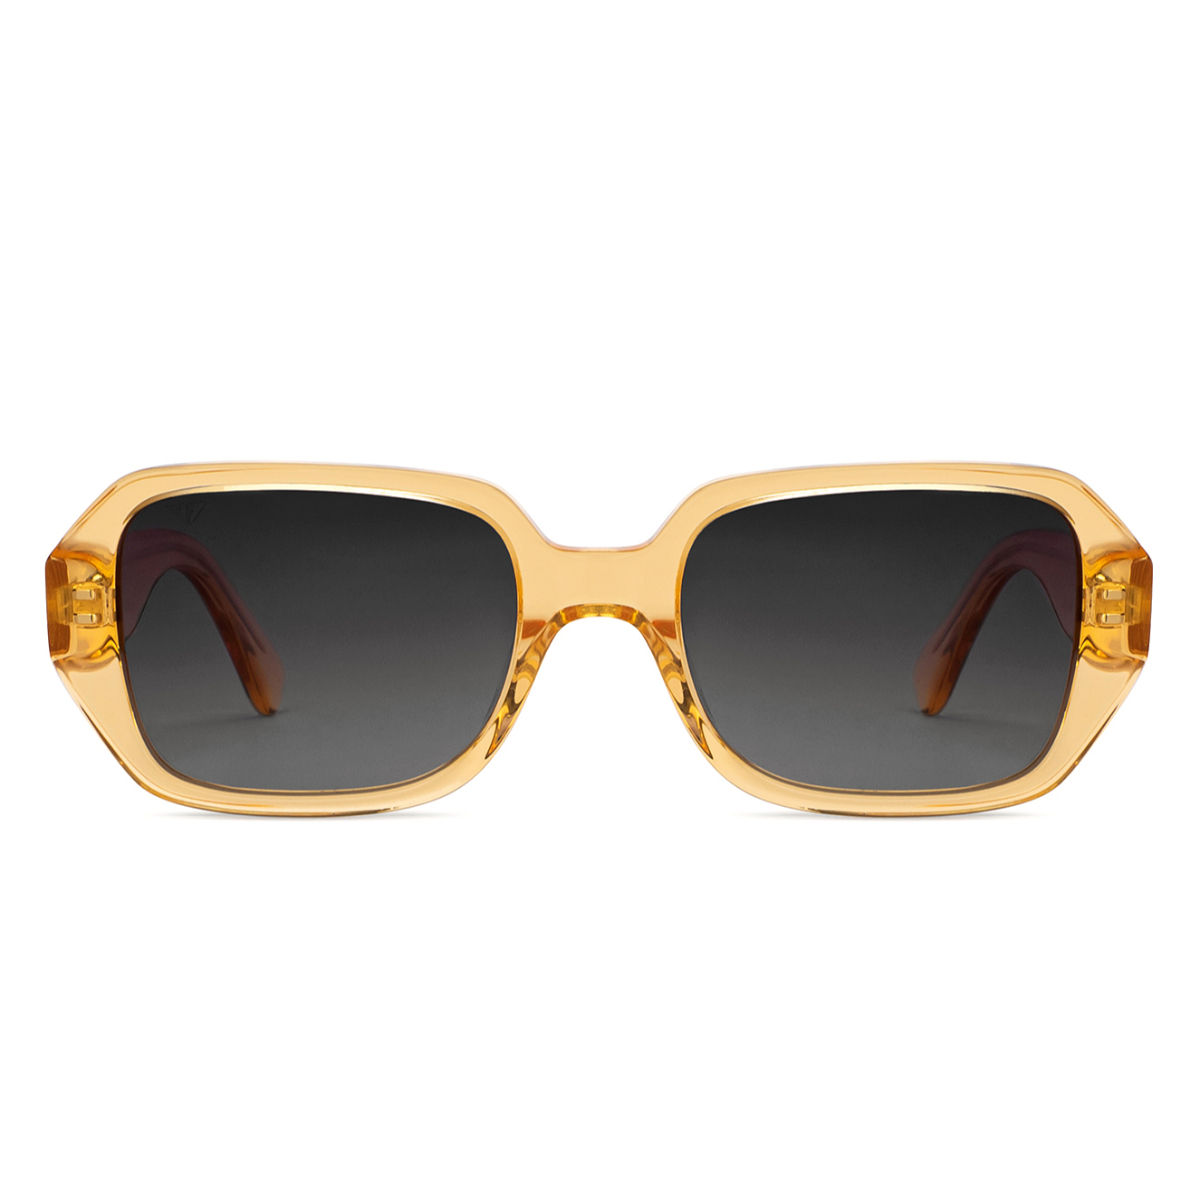 Buy Vincent Chase Polarized Sunglasses Online Starts at 1299 - Lenskart